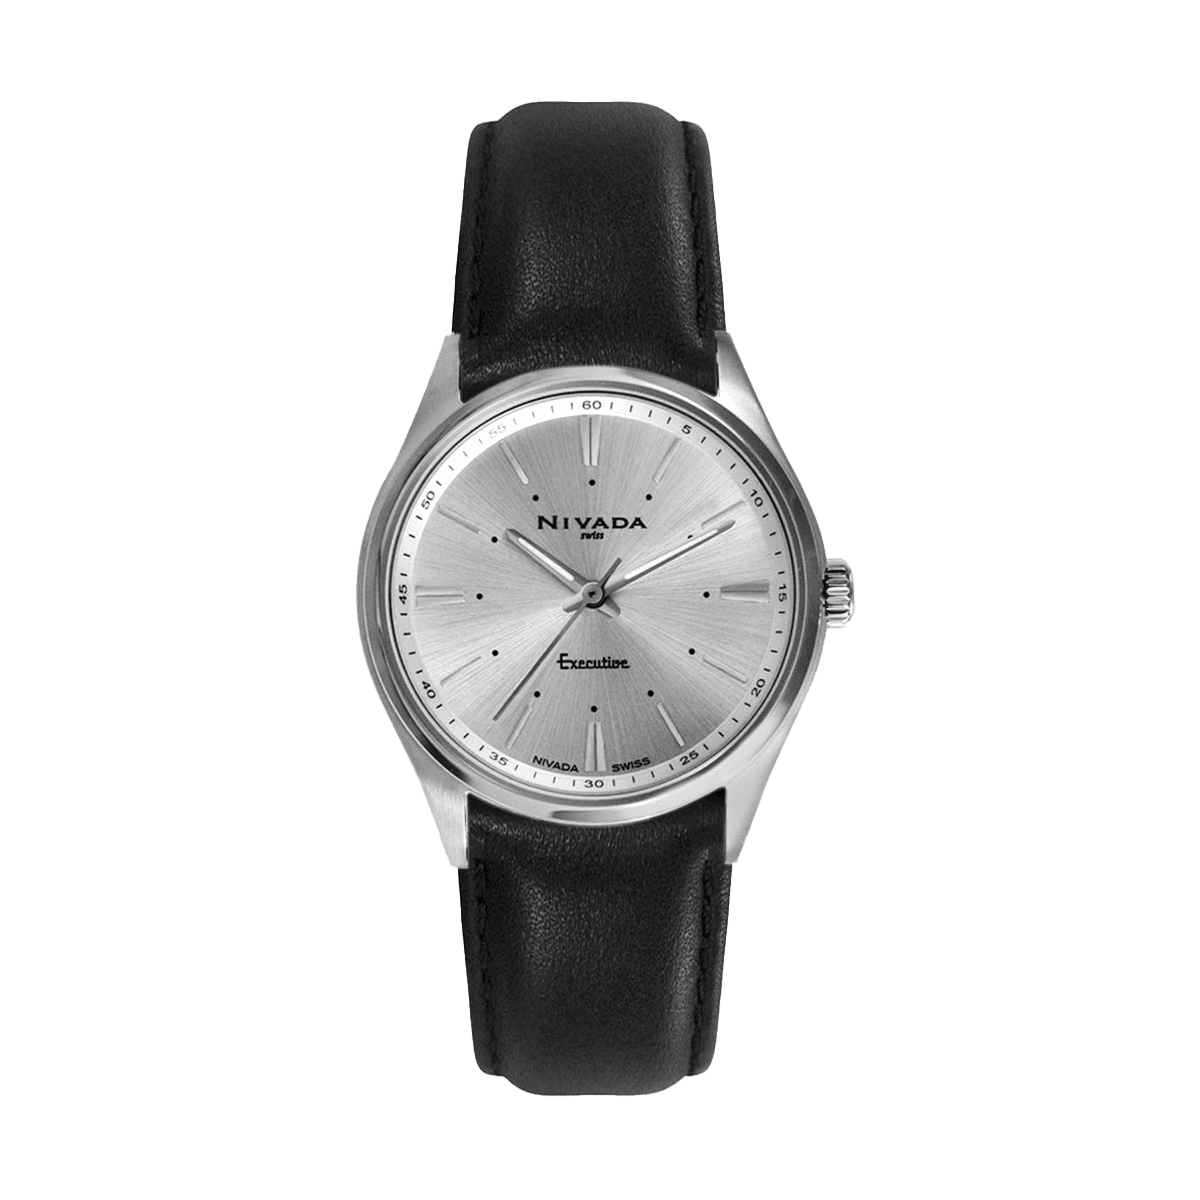 Executive Para Dama - Altitud 1601 - Reloj Nivada Swiss